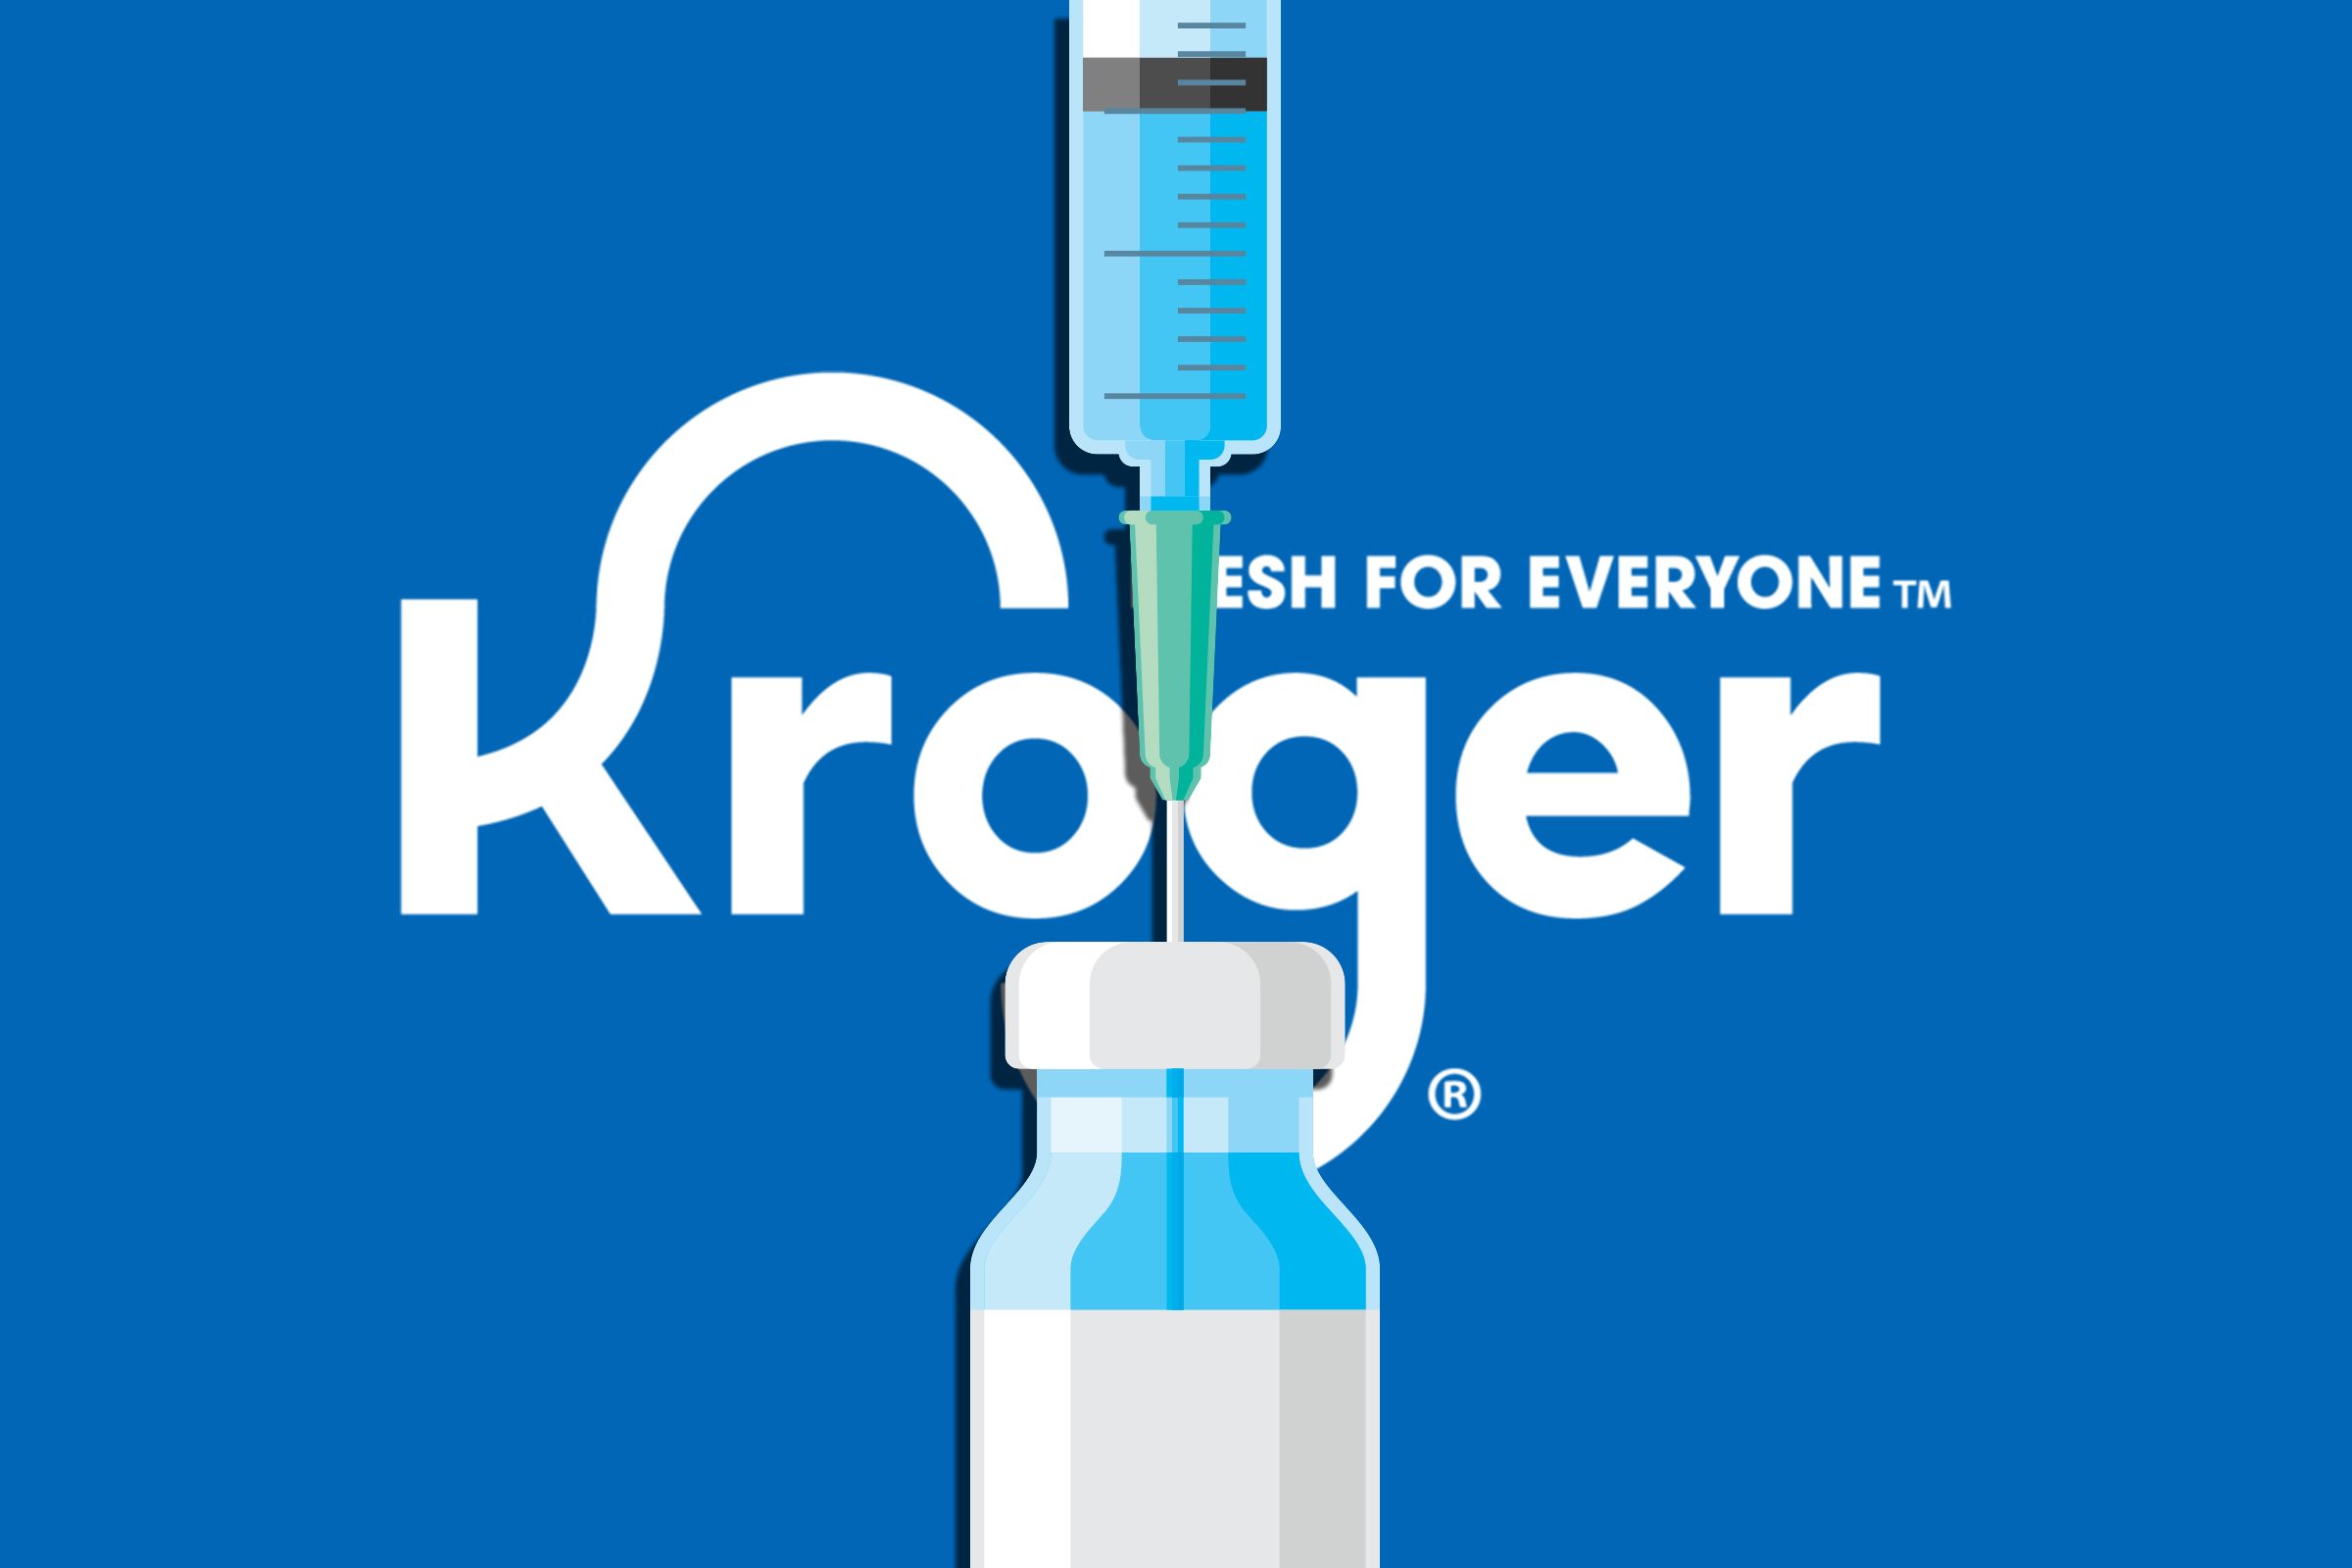 Kroger Flu Shot Appointment Scheduling